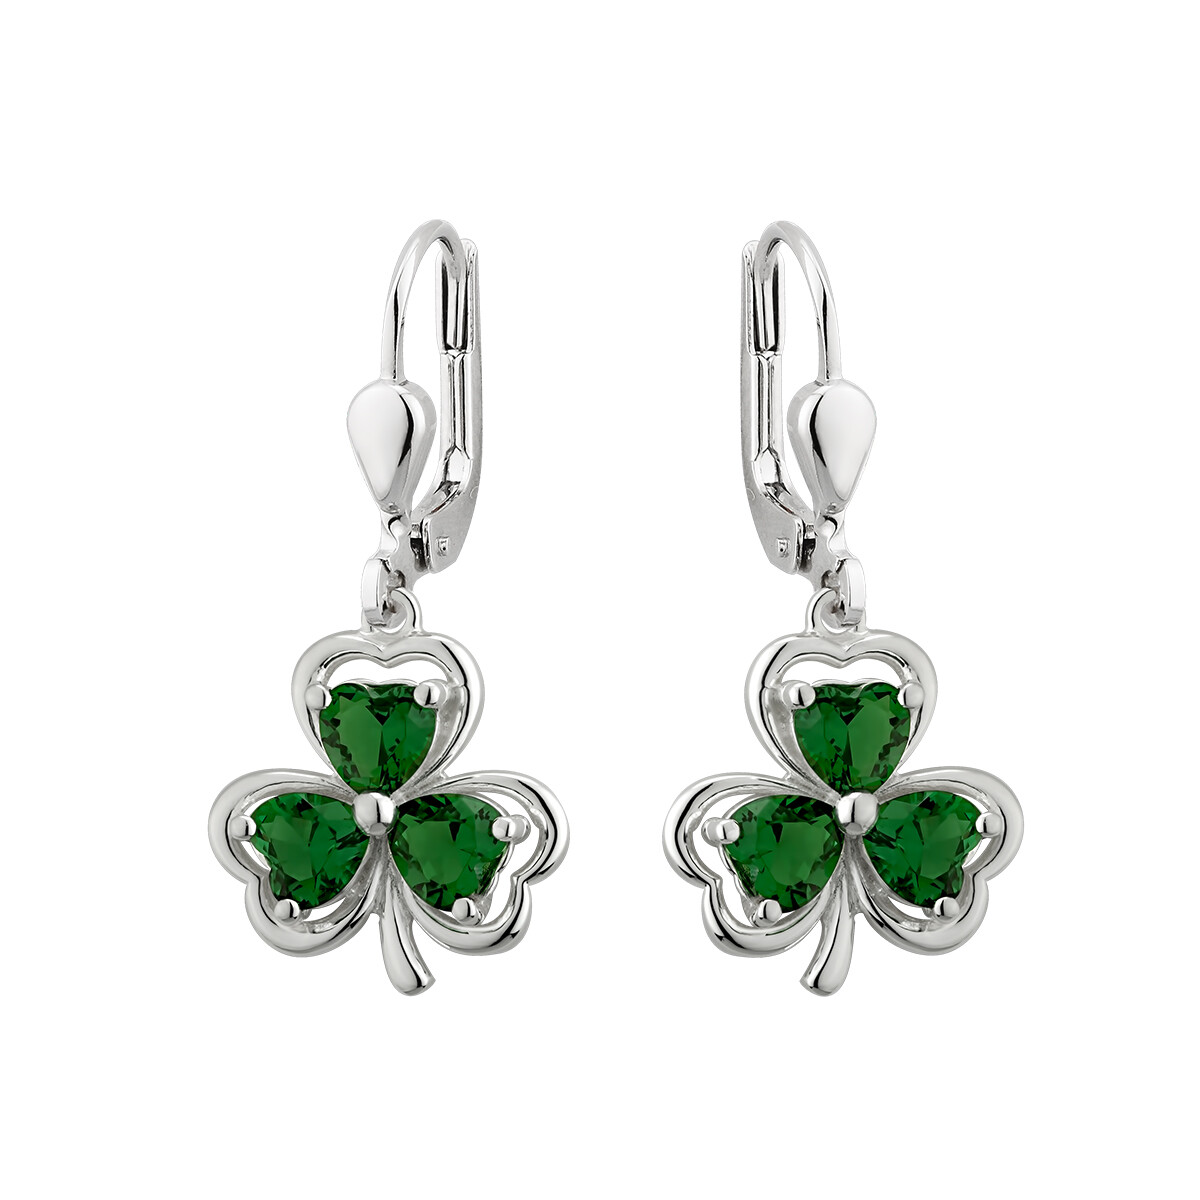 Sterling Silver Shamrock with Green Crystal leaves earrings